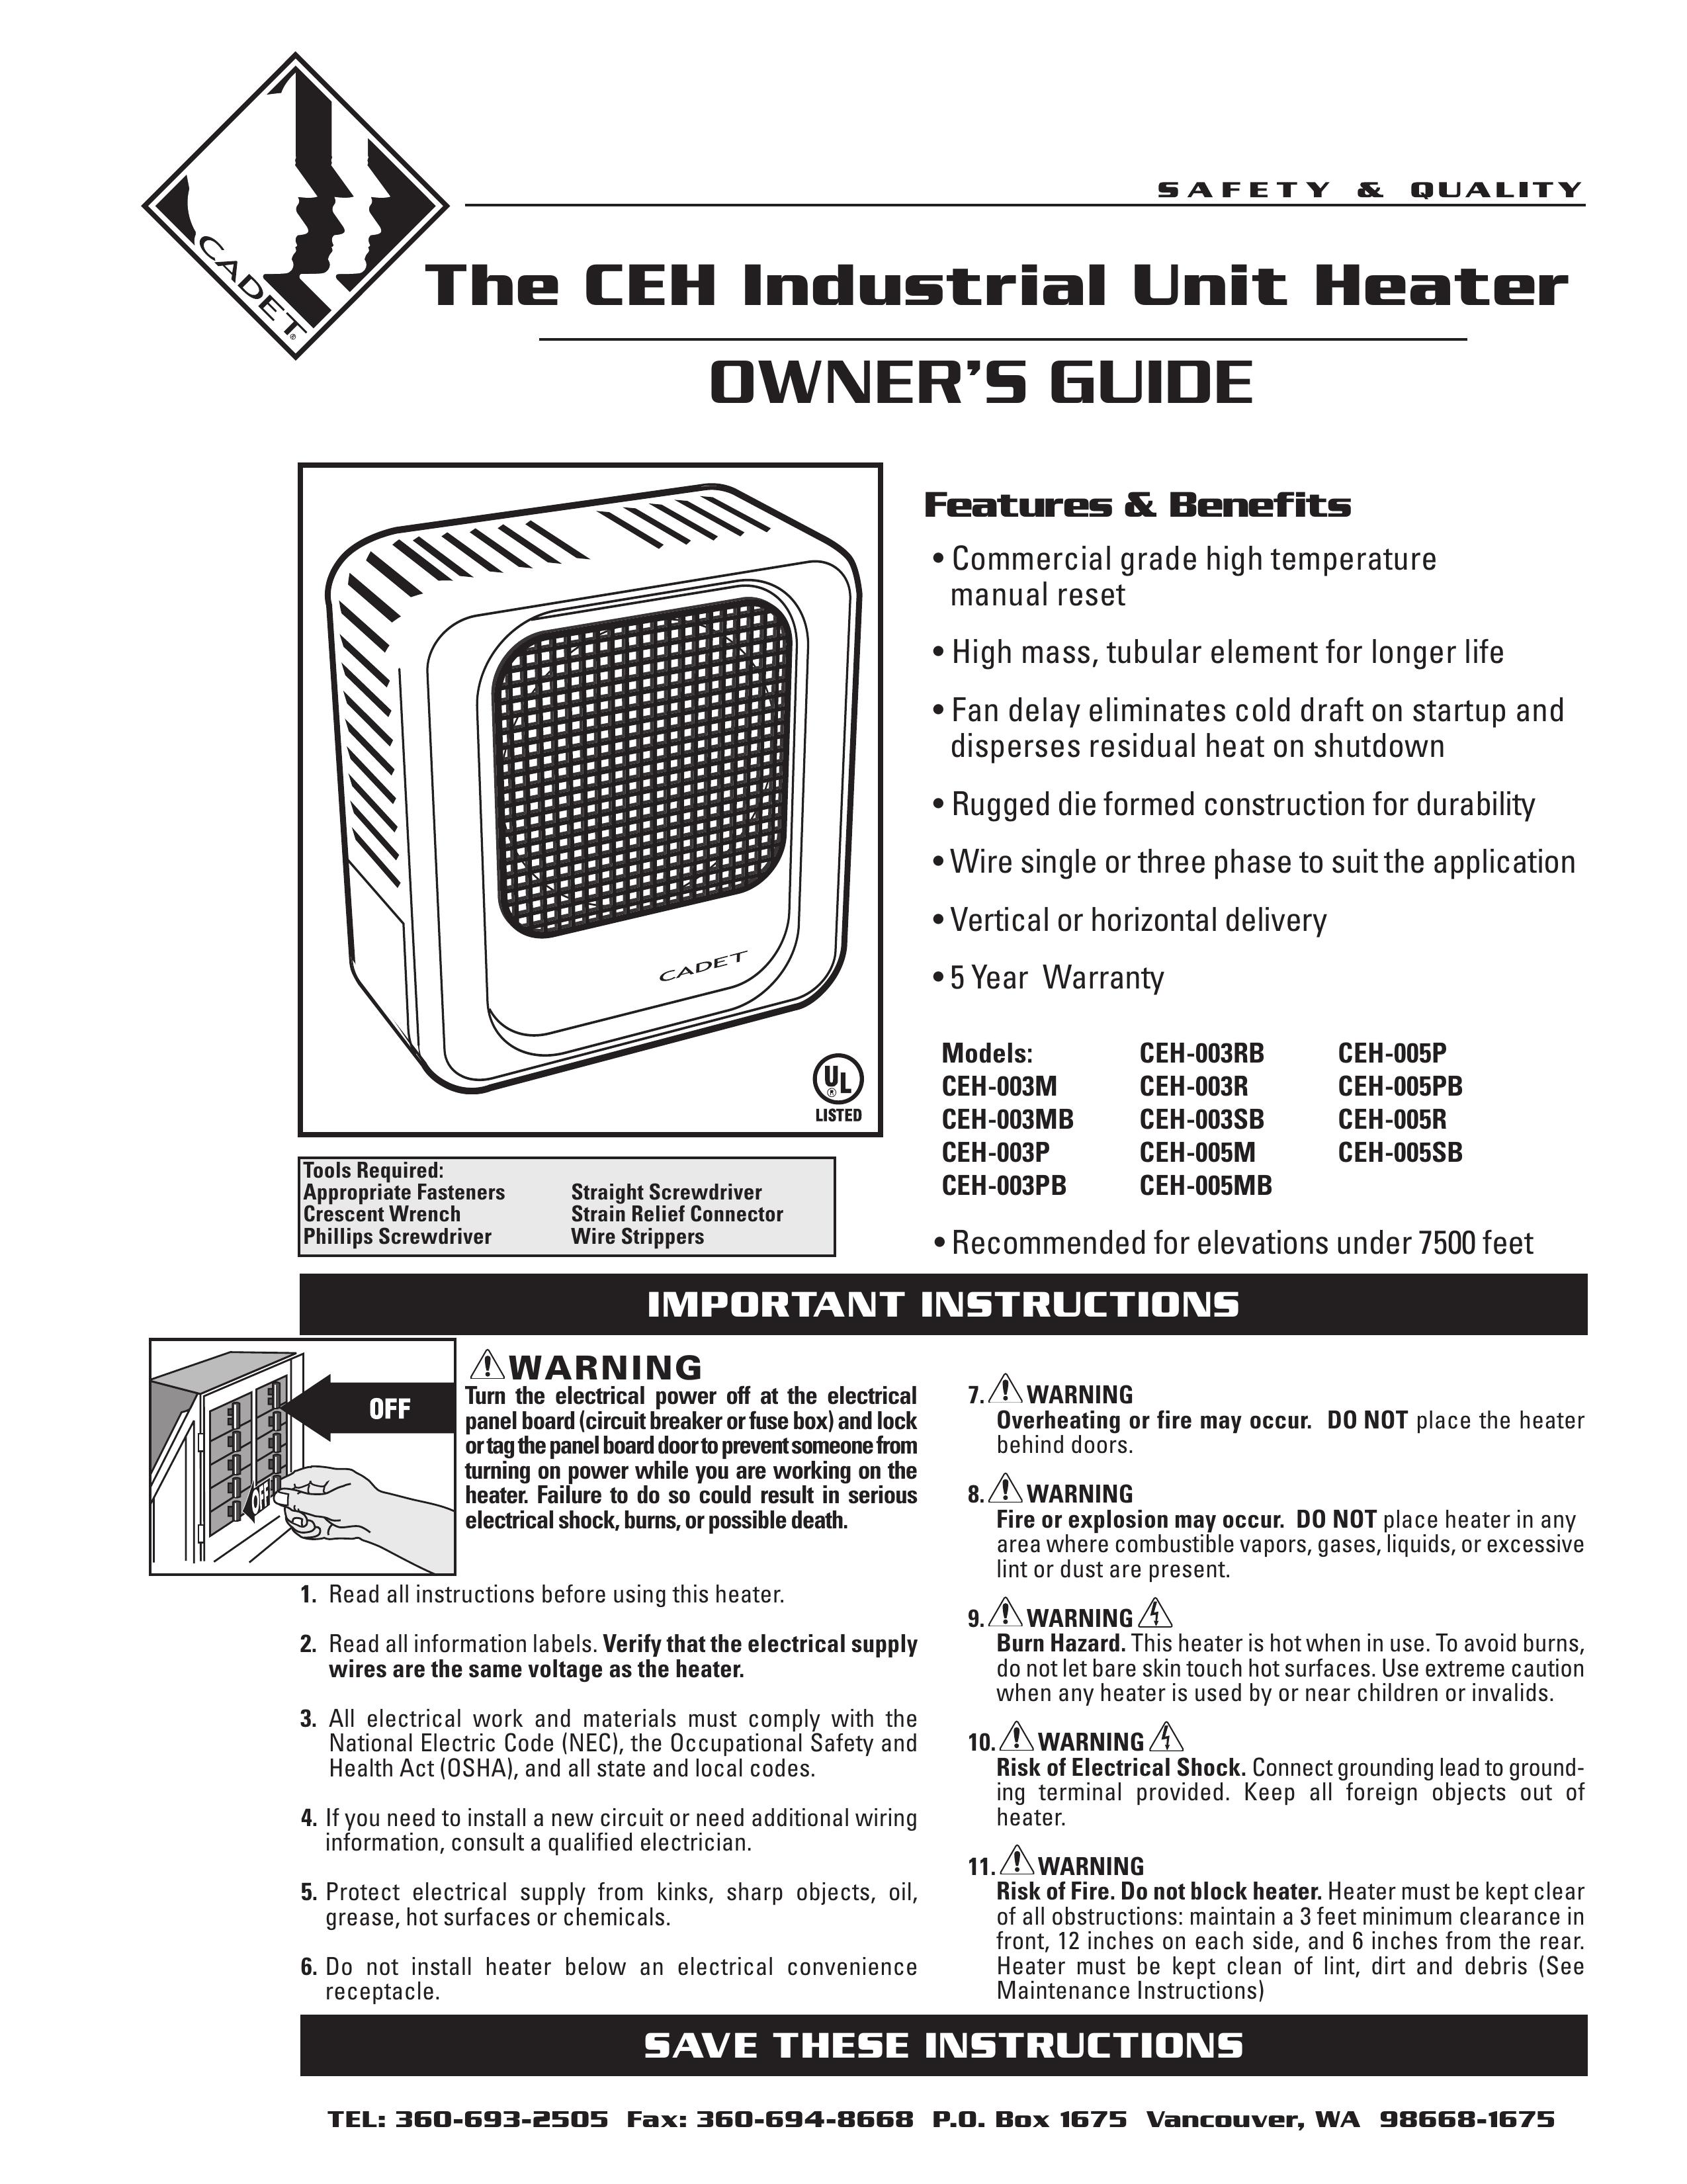 Cadet CEH-003P Patio Heater User Manual